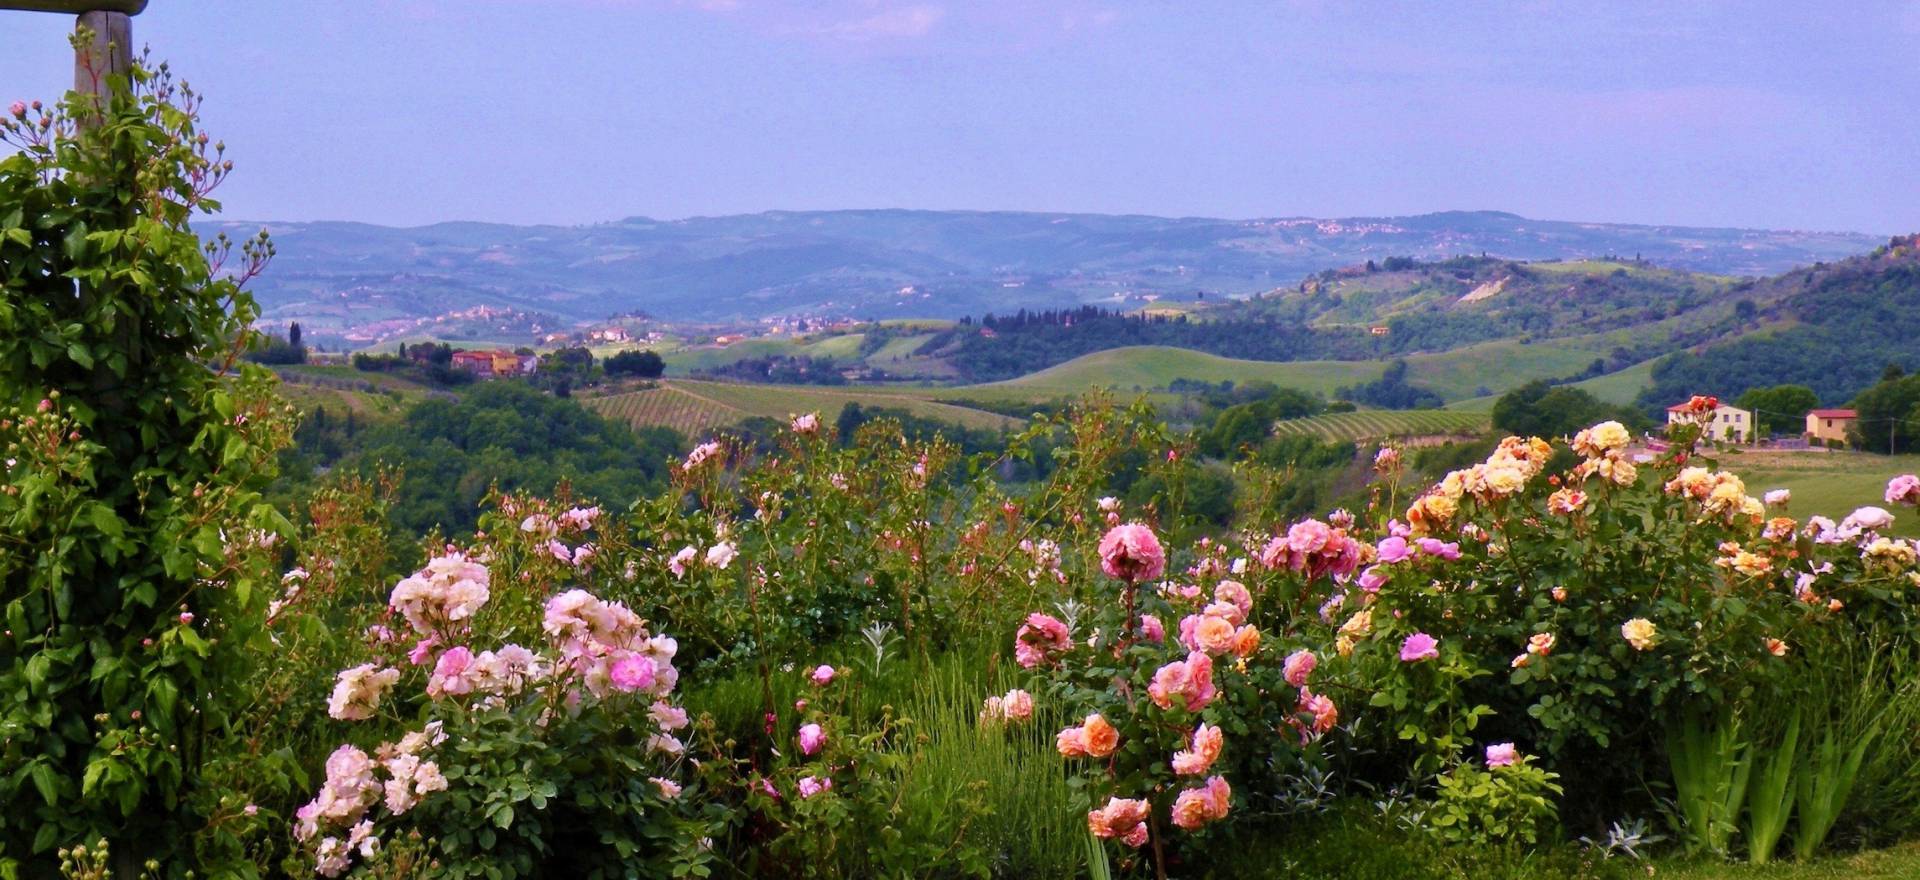 Agriturismo Toscana Agriturismo Toscana in uliveto con vista mozzafiato